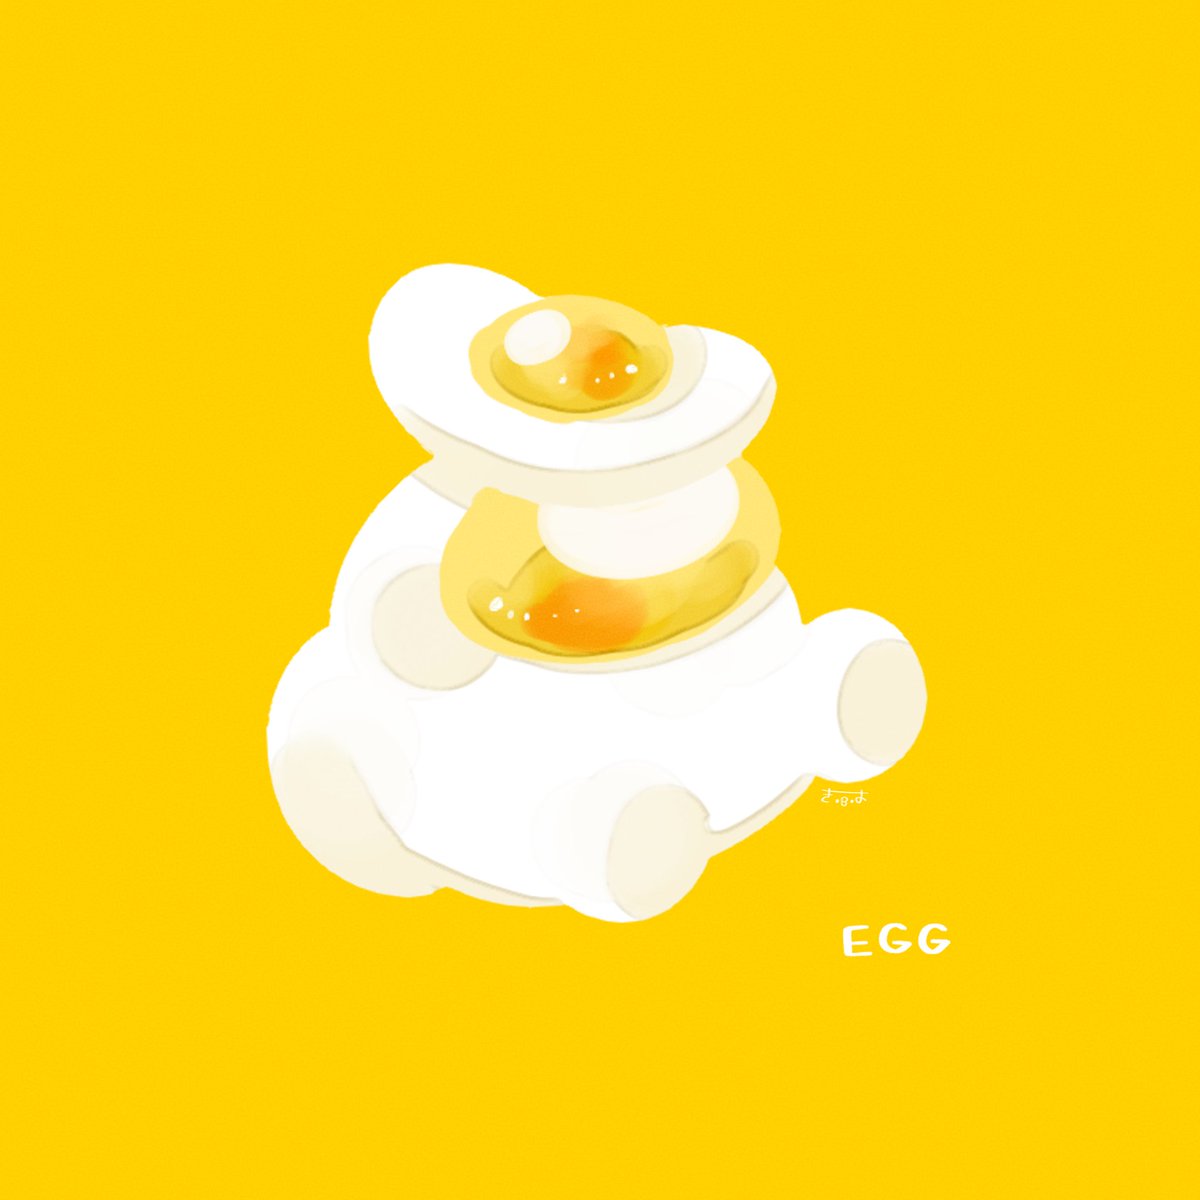 no humans food egg (food) simple background fried egg yellow background holding  illustration images